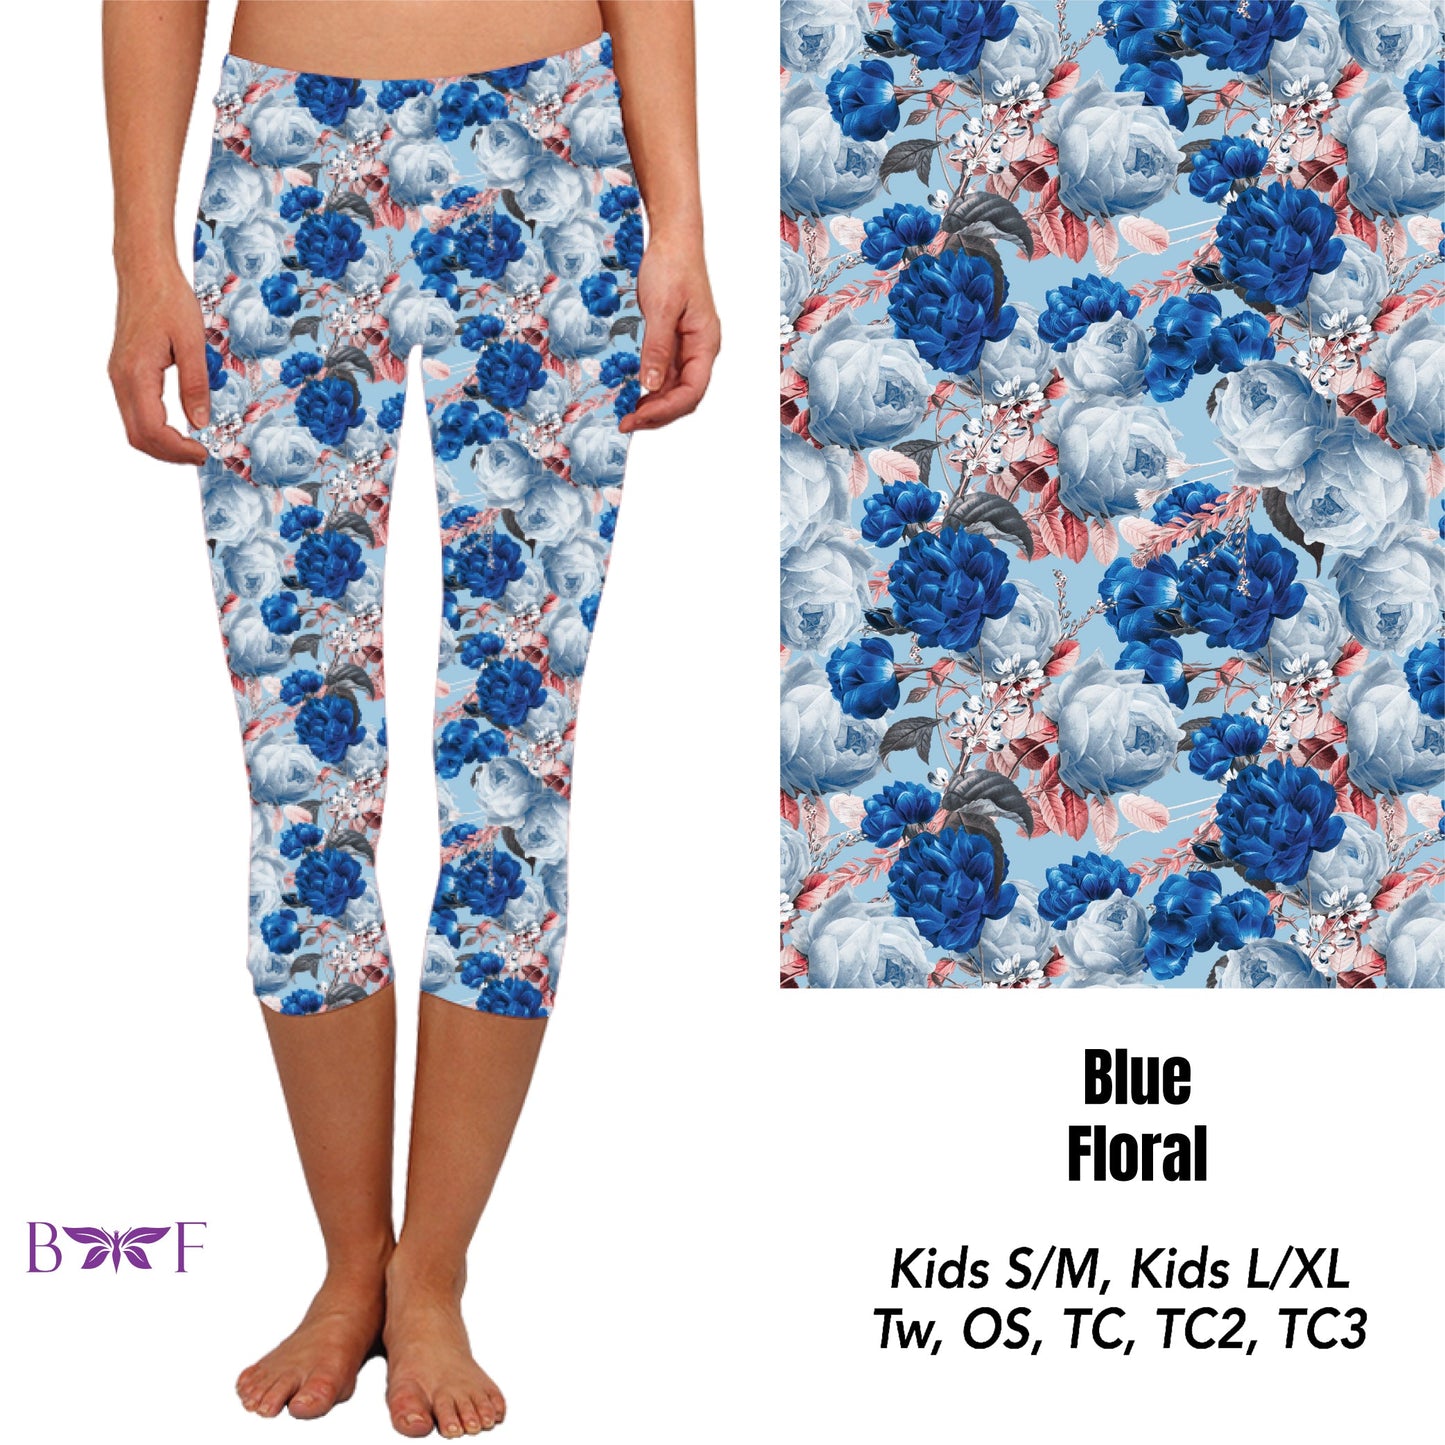 Blue Floral Leggings and Capris